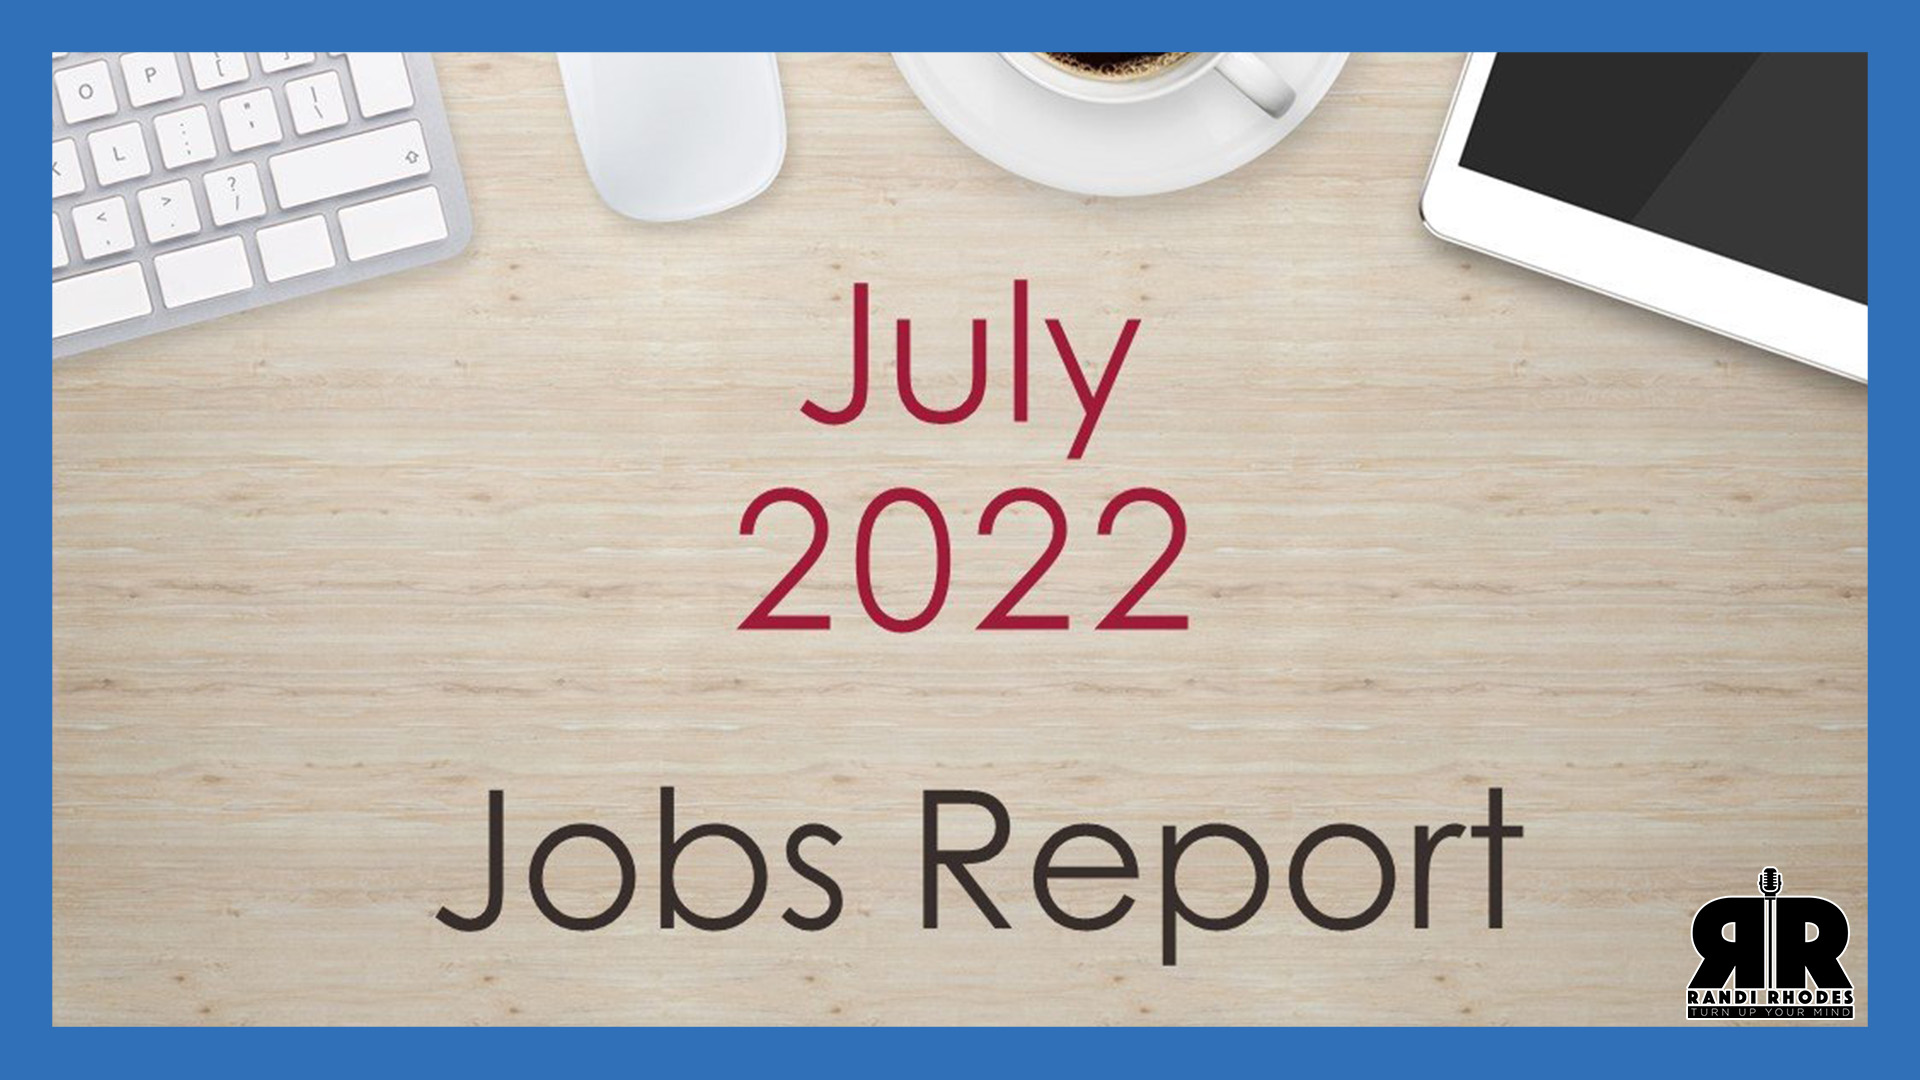 July's Job Report Is In!